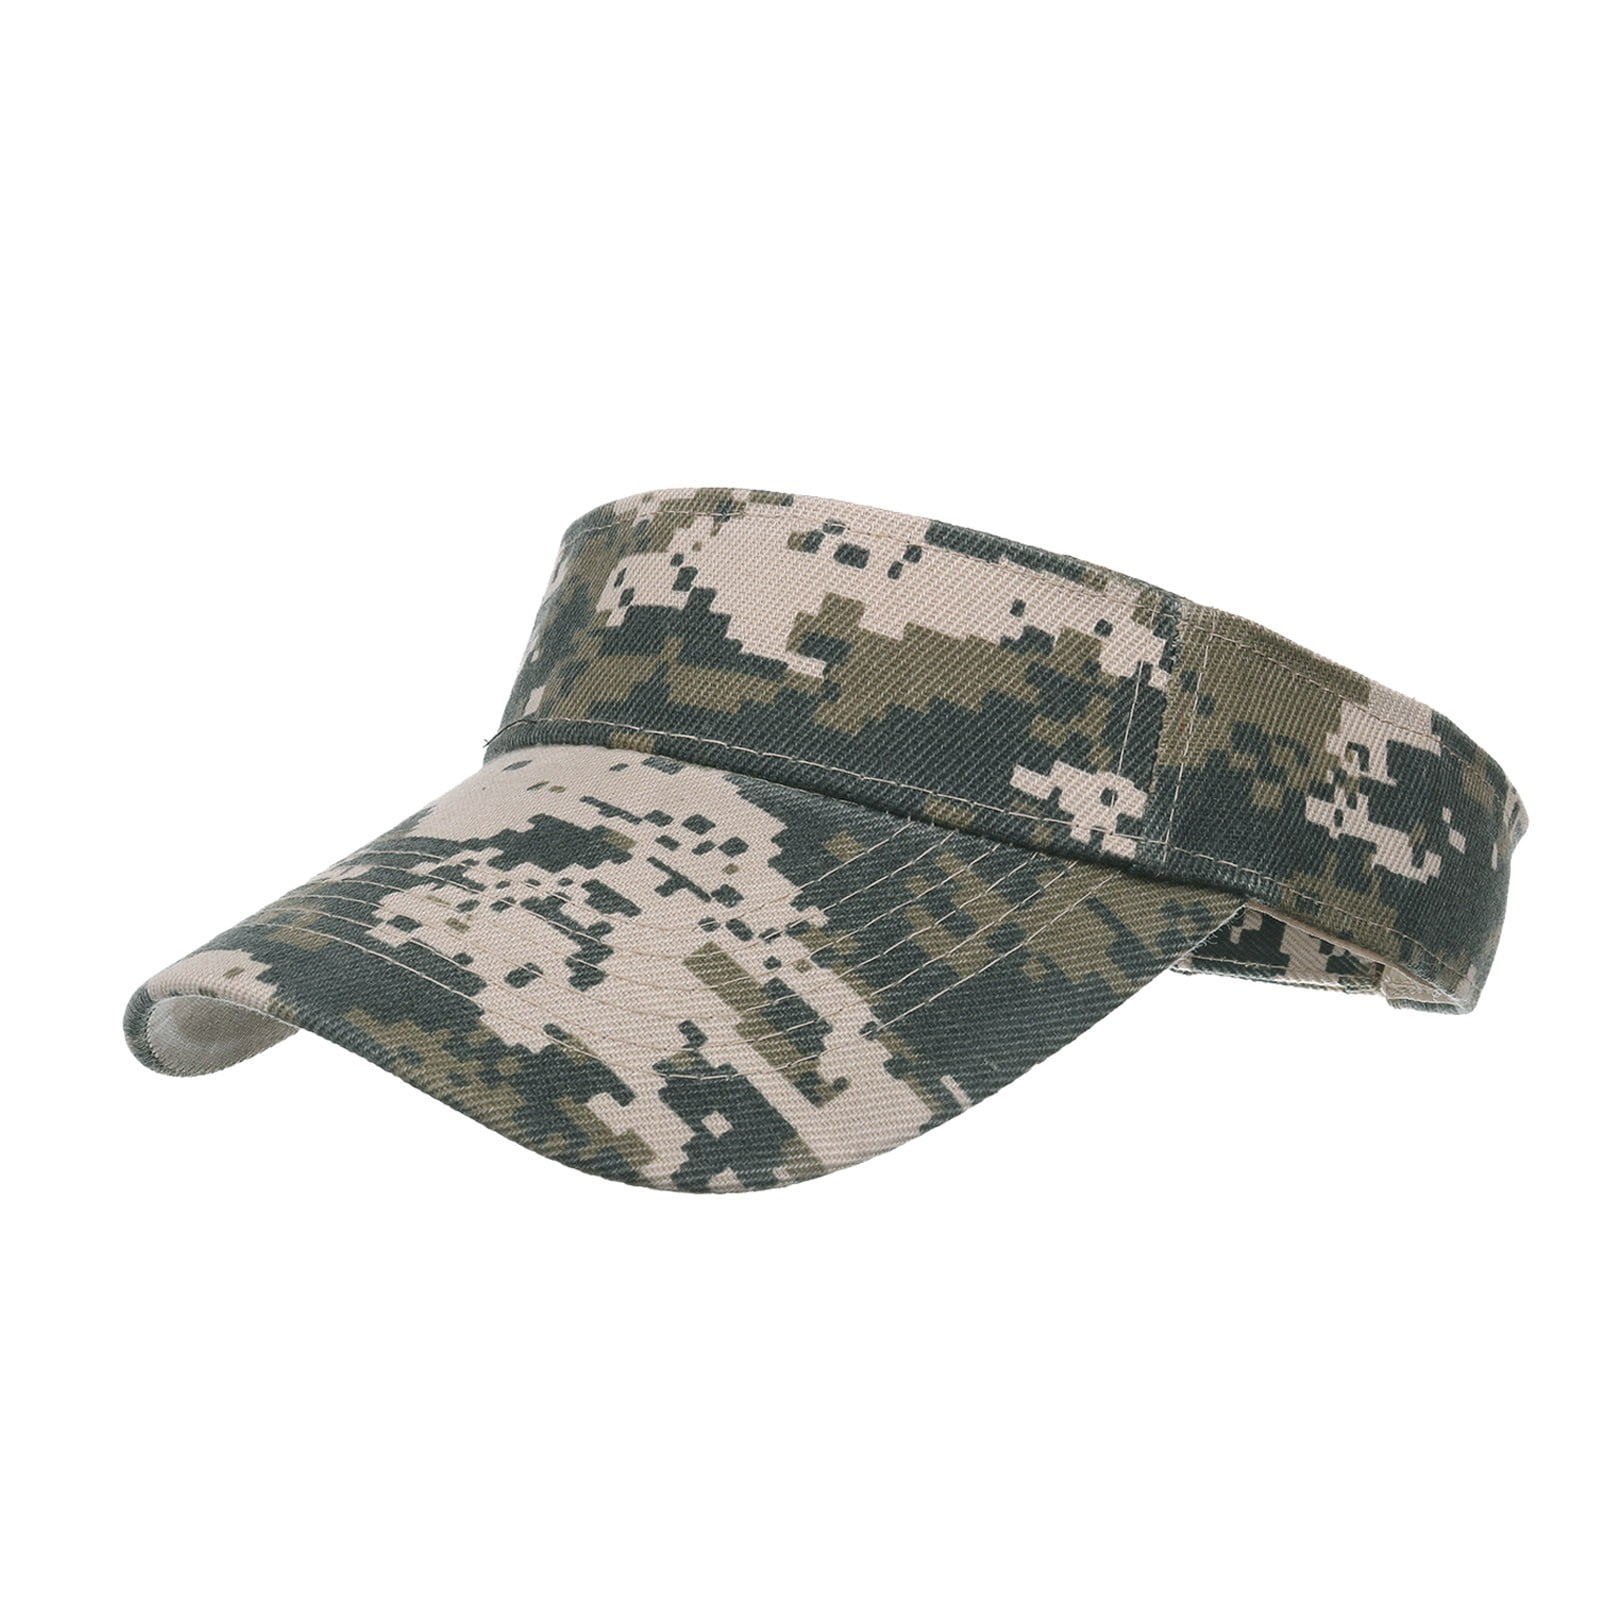 Unisex Men Women Camo Baseball Cap Hat Army Camouflage Hip Hop Sport Adjustable